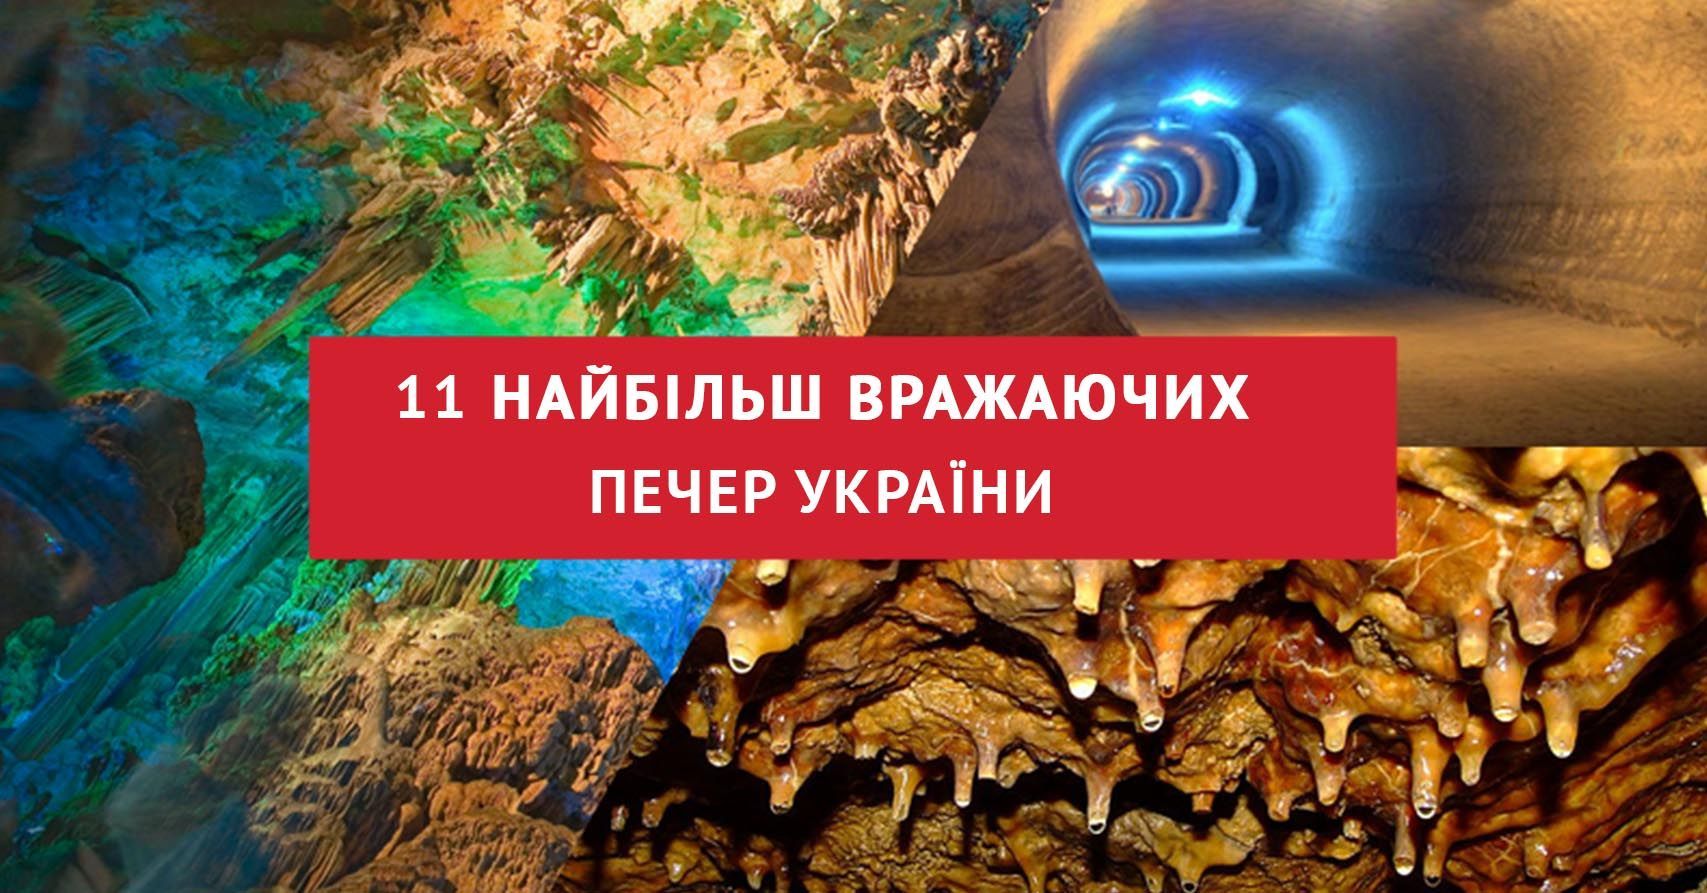 11 печер України, які вразять кожного